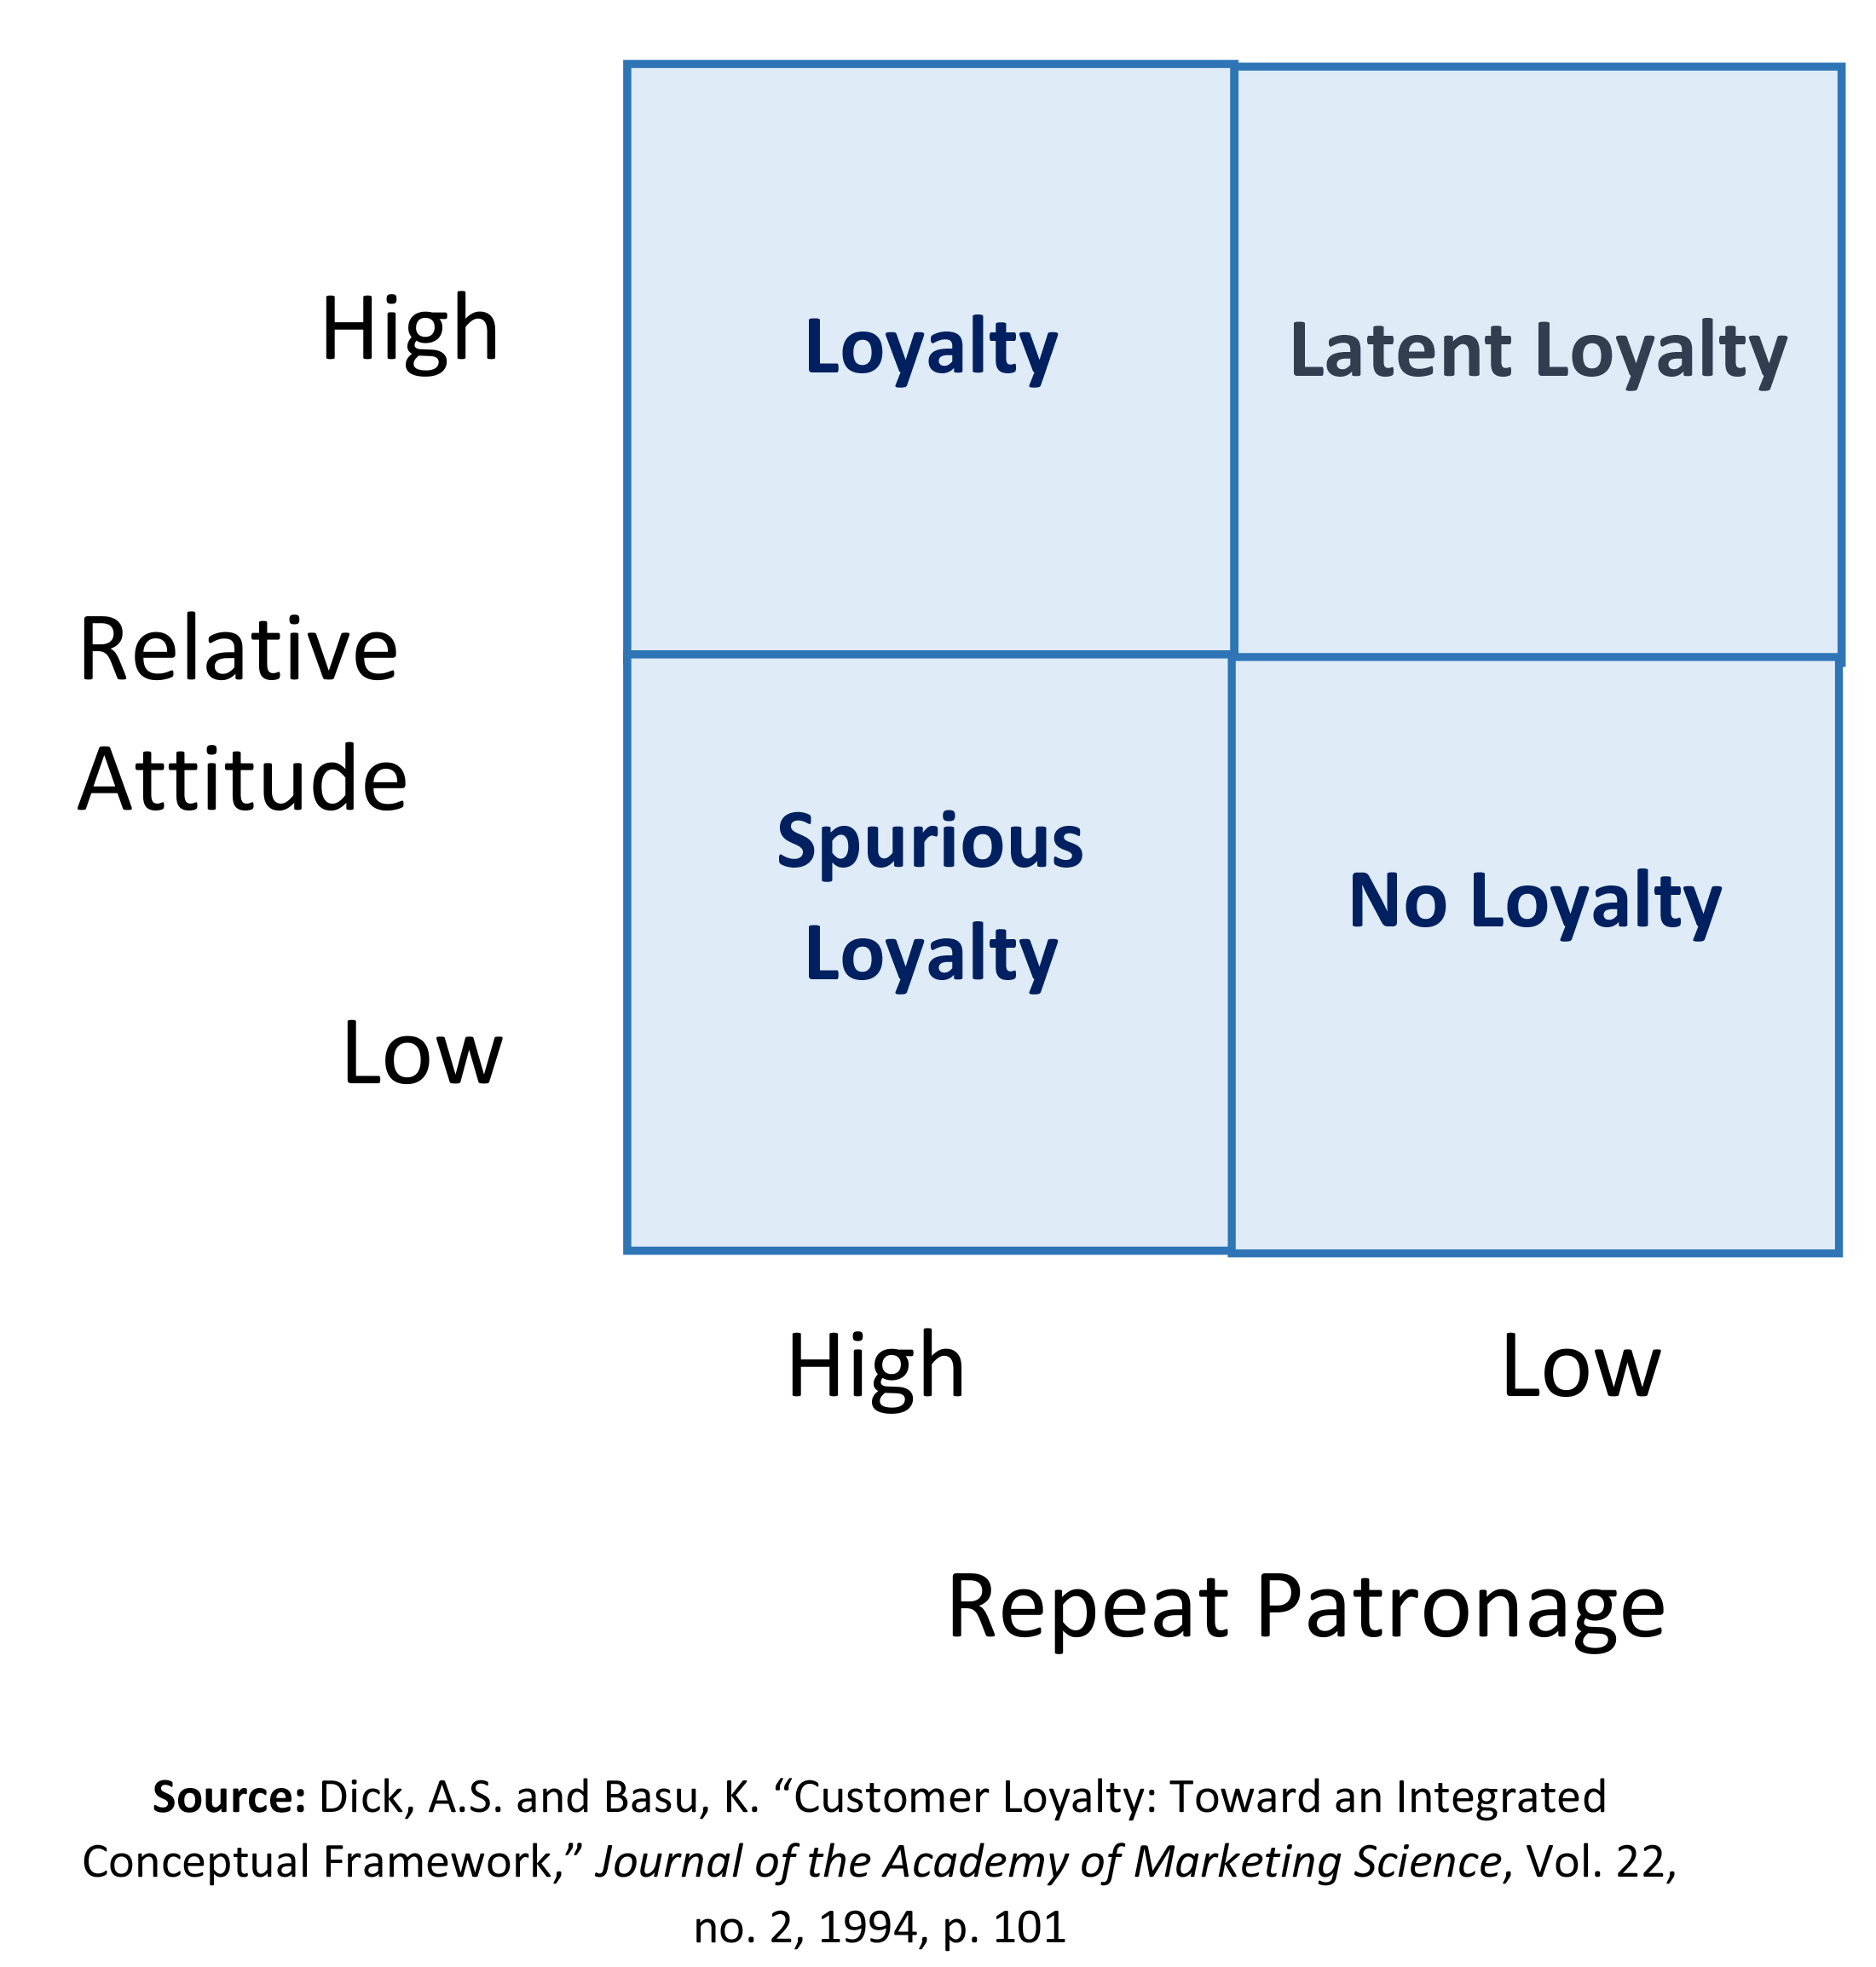 1. Identifying Loyalty Strategies